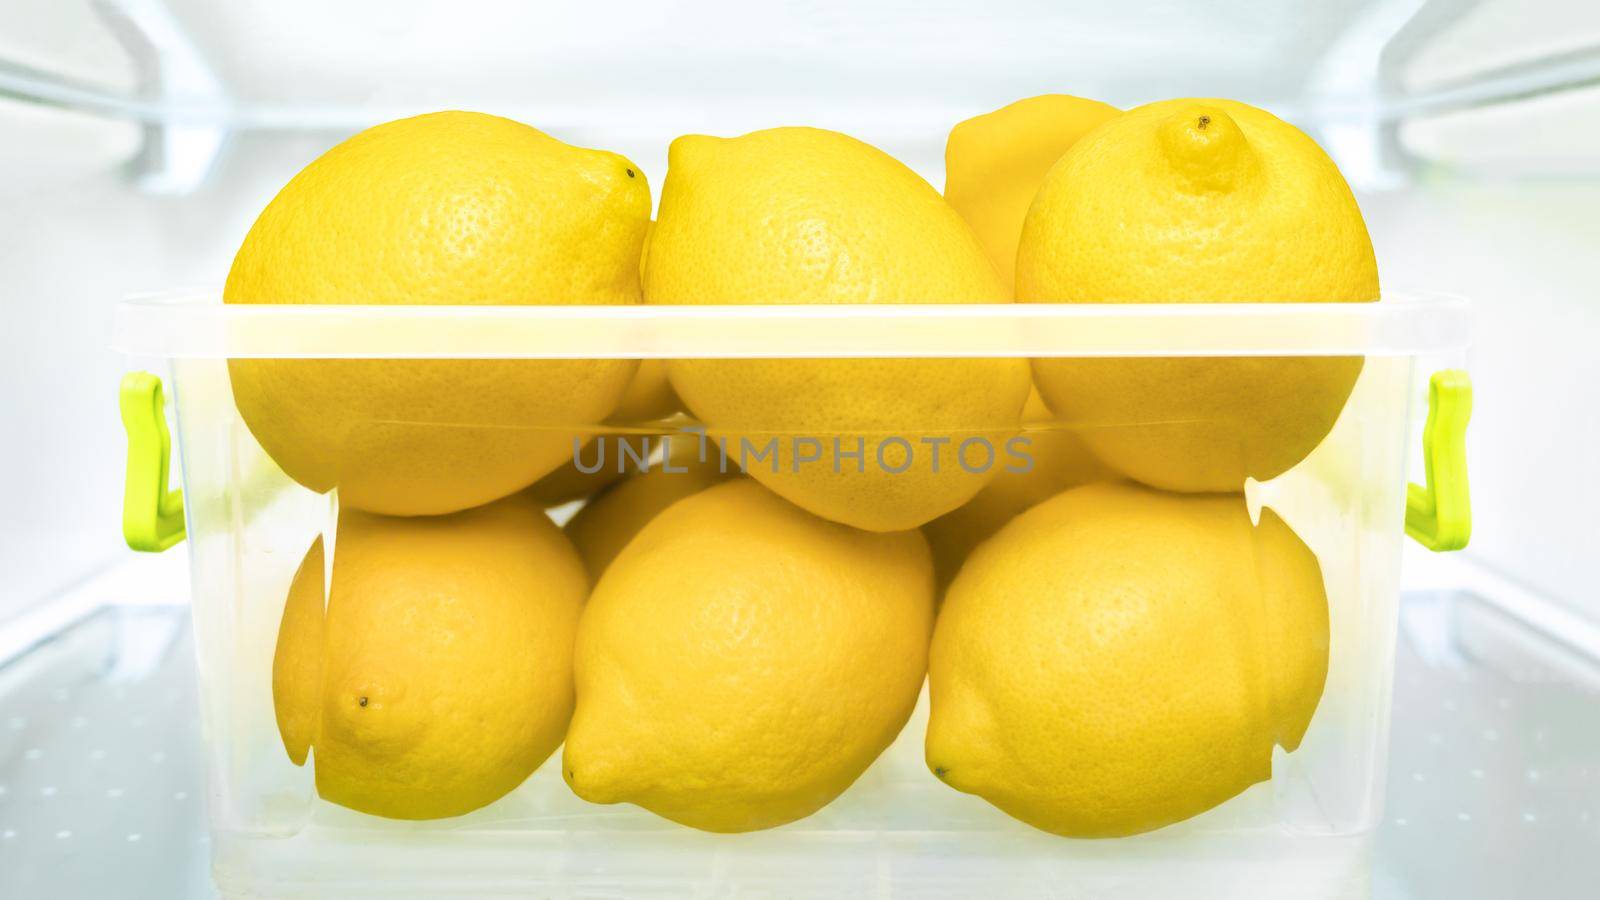 Cool lemon fridge lemonade detox juice ripe fruit in plastic box refrigerator. Food storage containers lemons refrigerator healthy eating fresh fruits fridge stocking vitamin C immune system boosters by synel